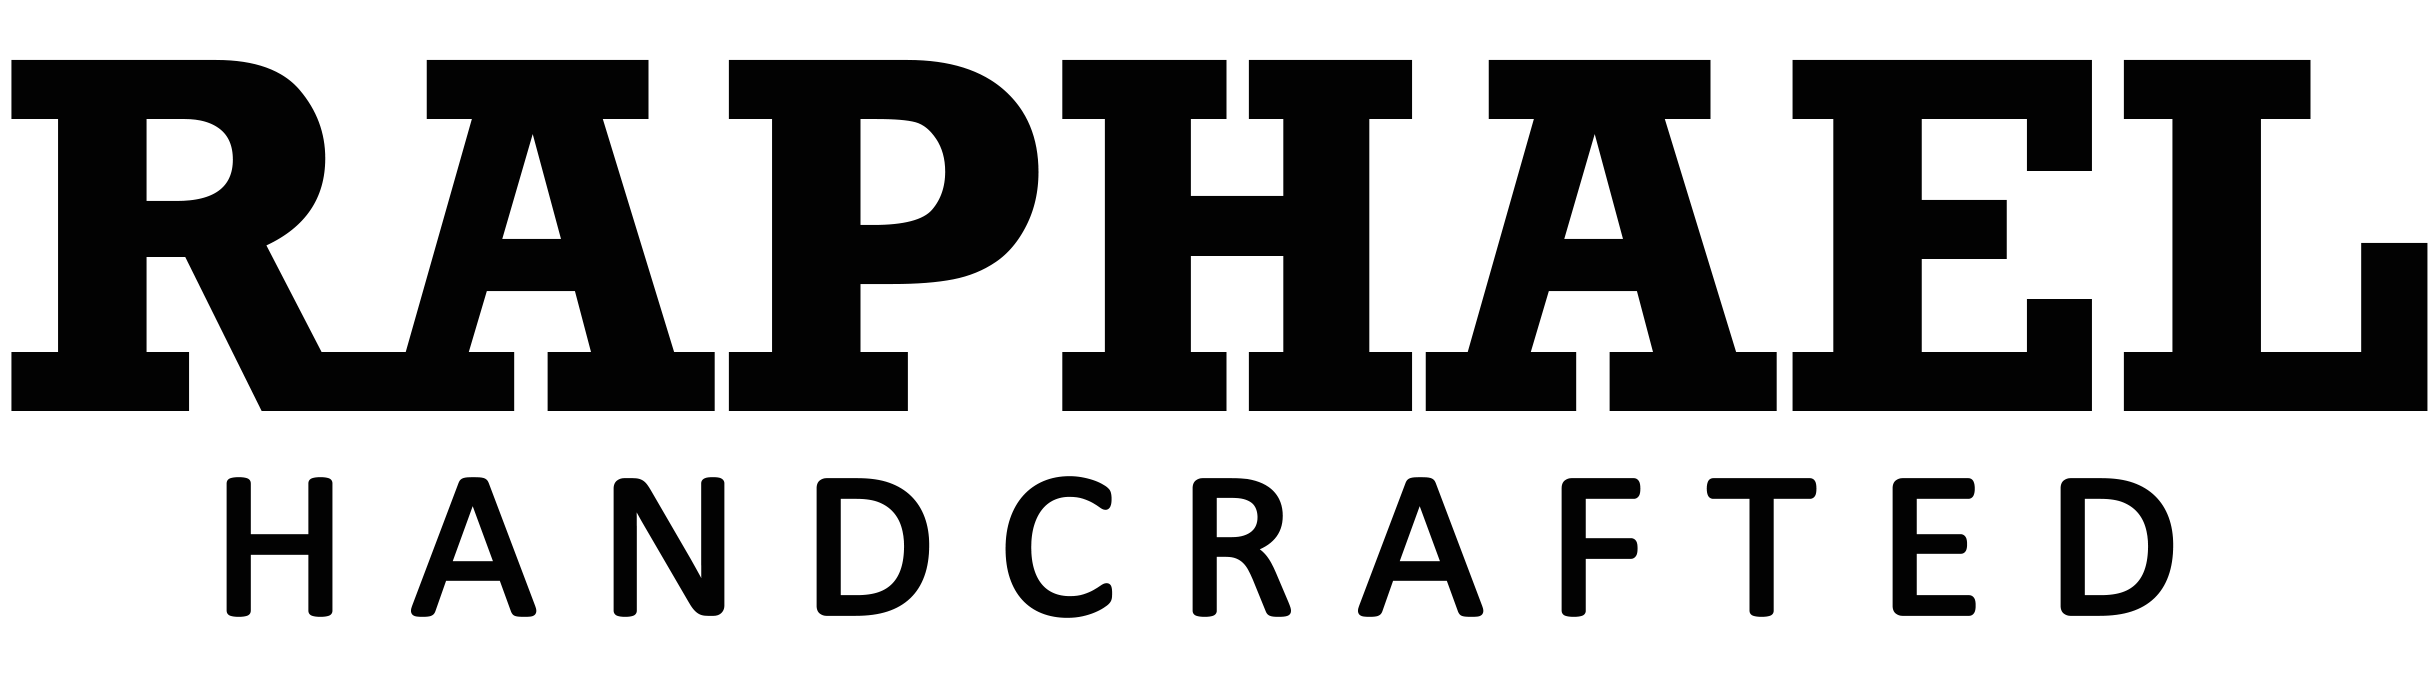 raphael logo 